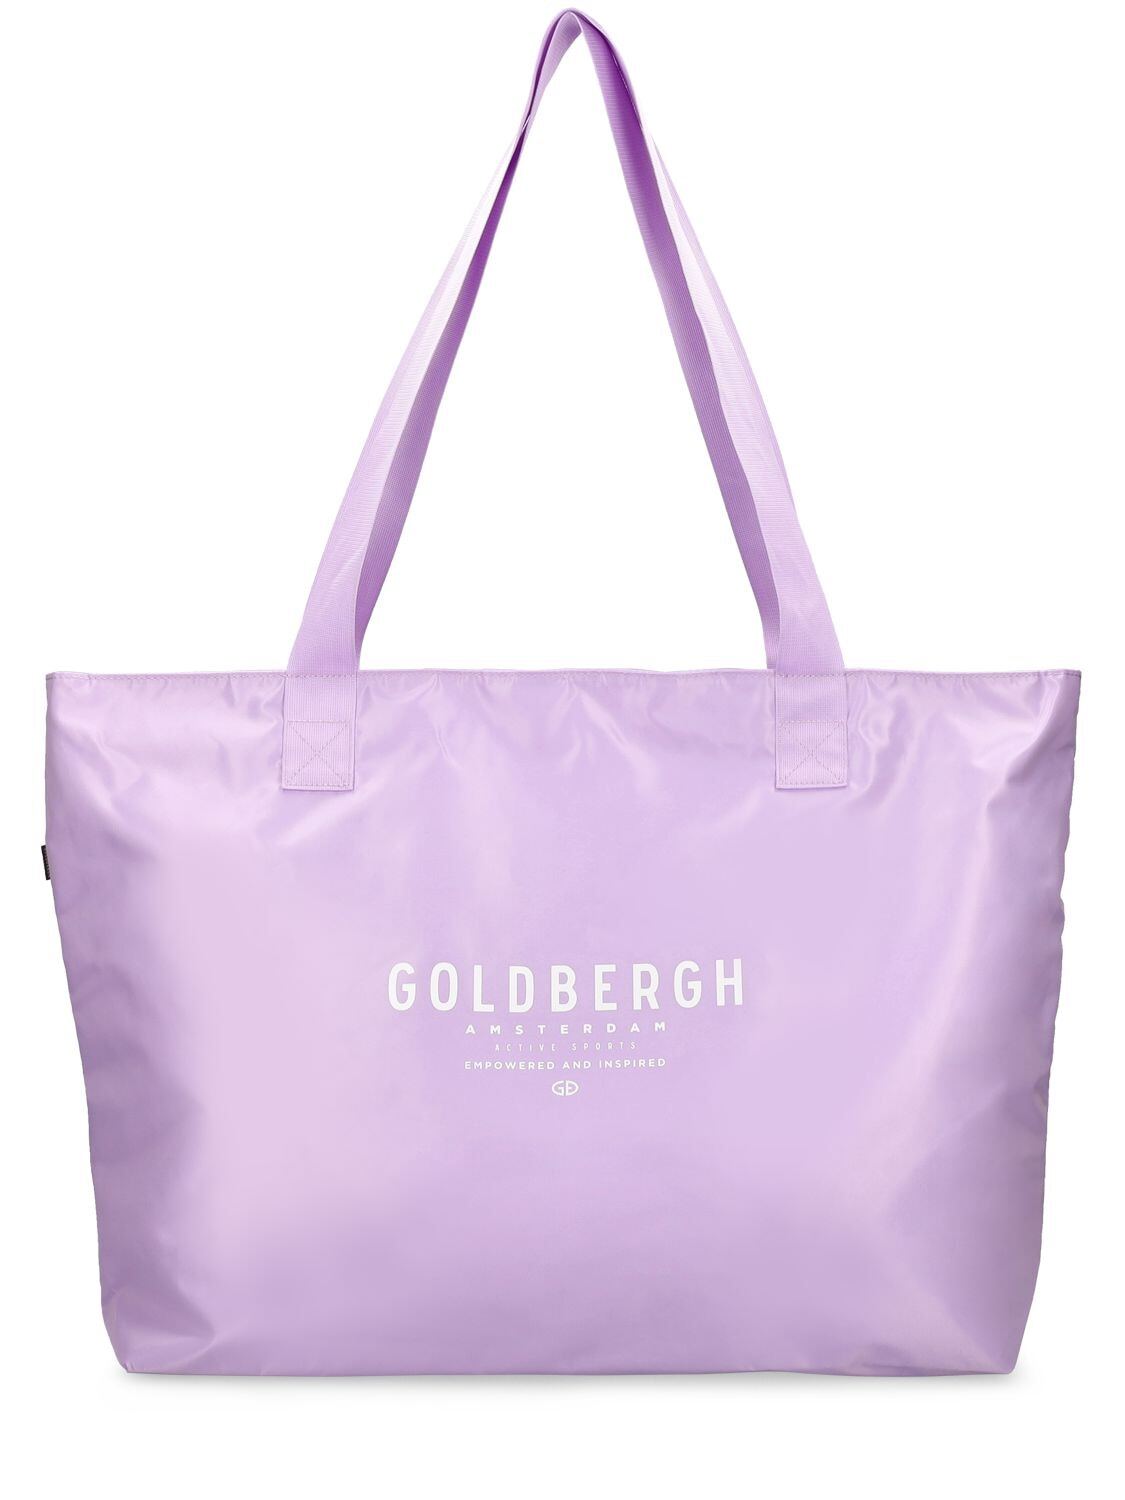 GOLDBERGH Kopal Tote Bag in lavender